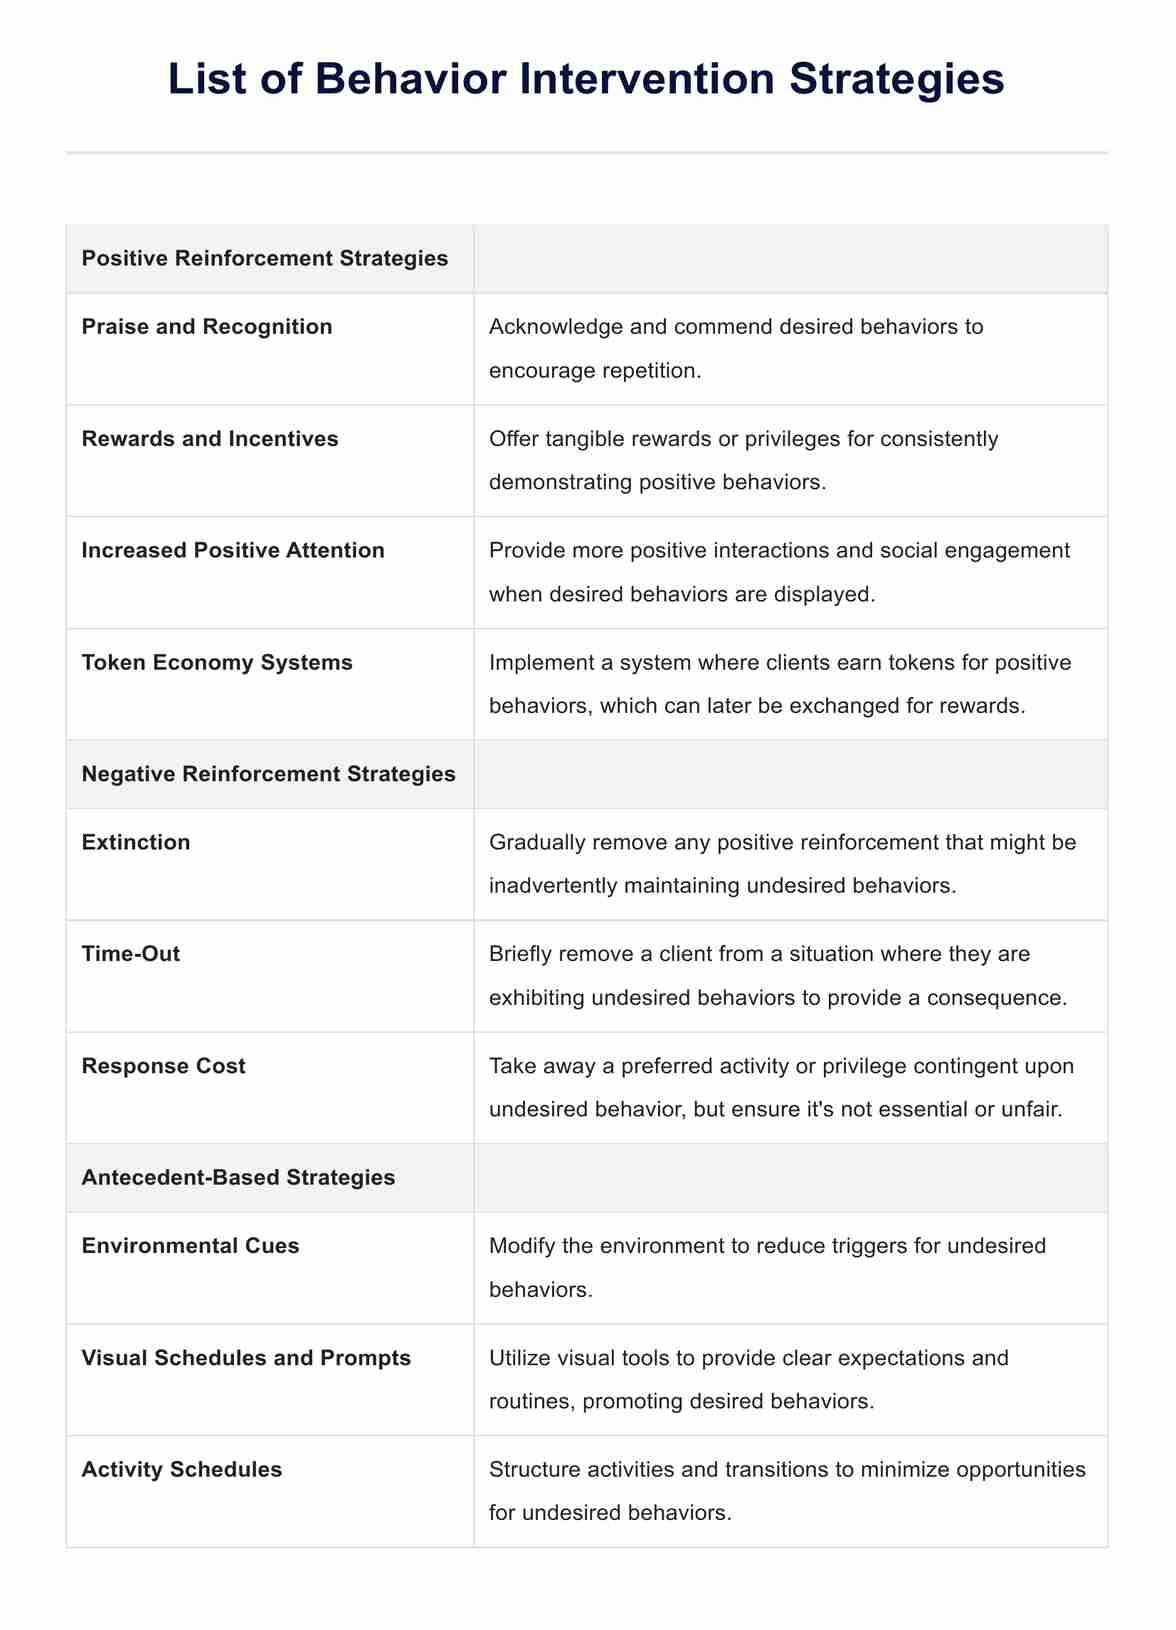 List of Behavior Intervention Strategies PDF PDF Example